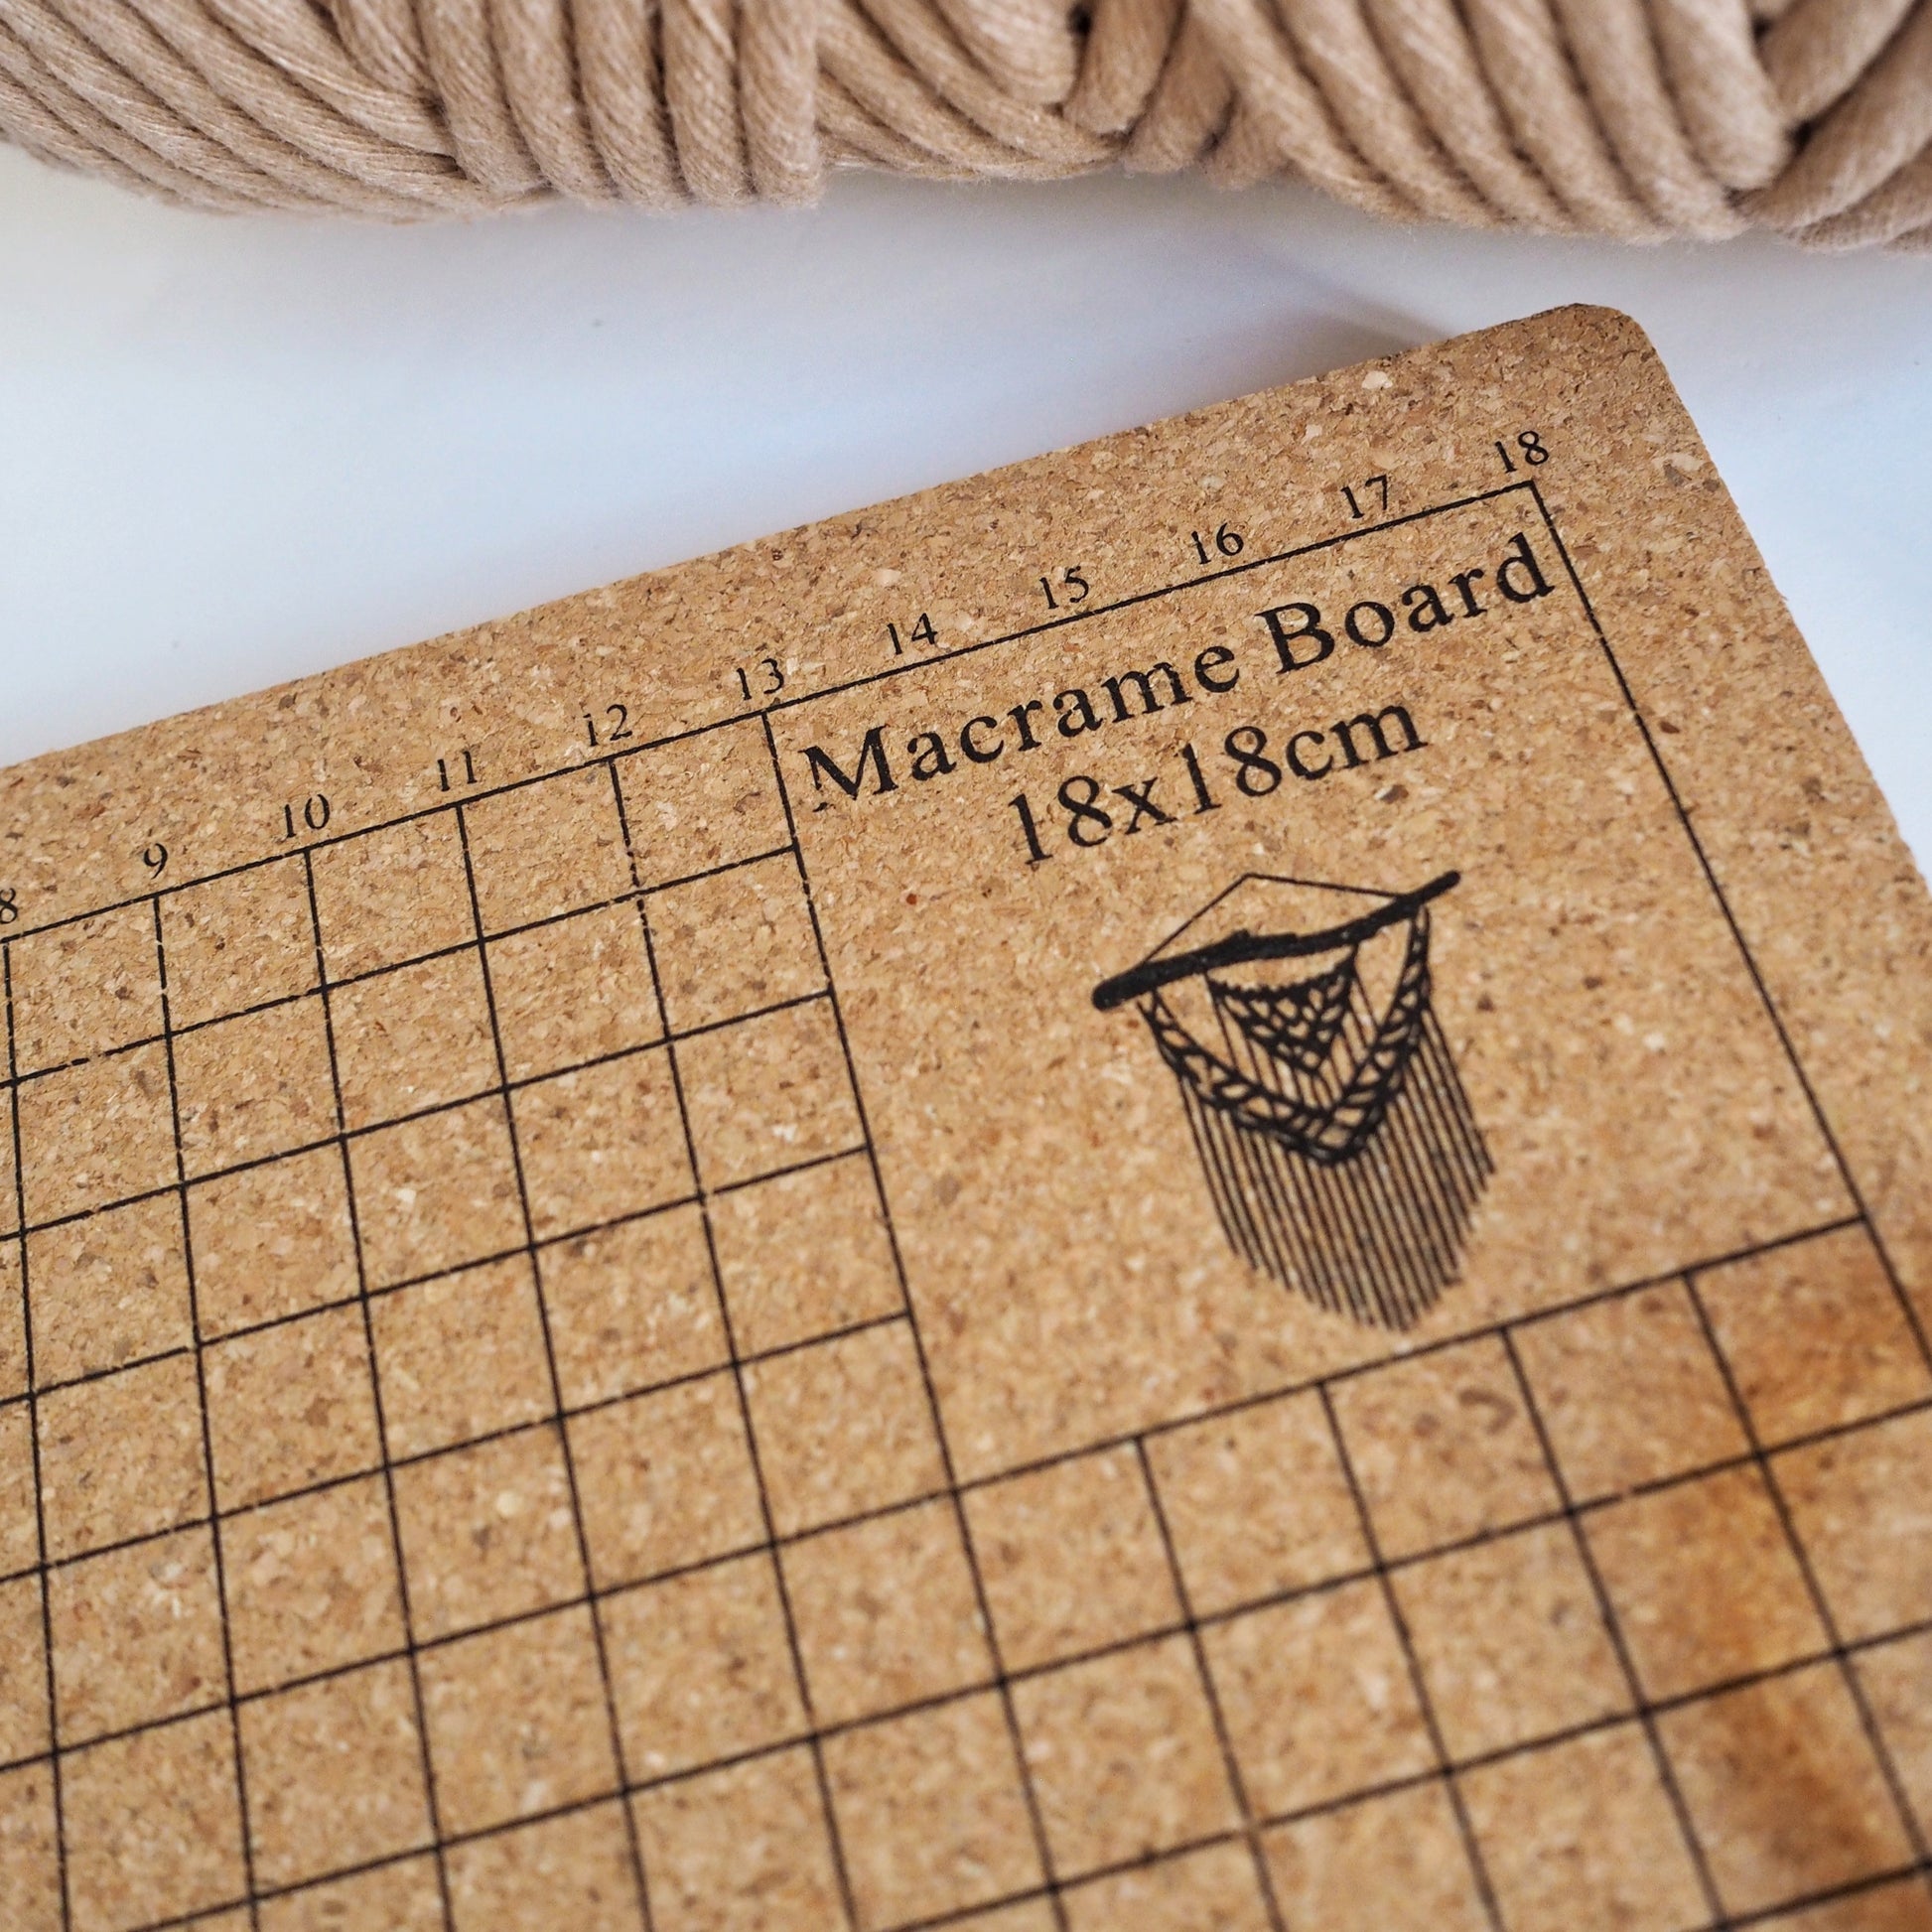 Cork Macrame Board - Small 